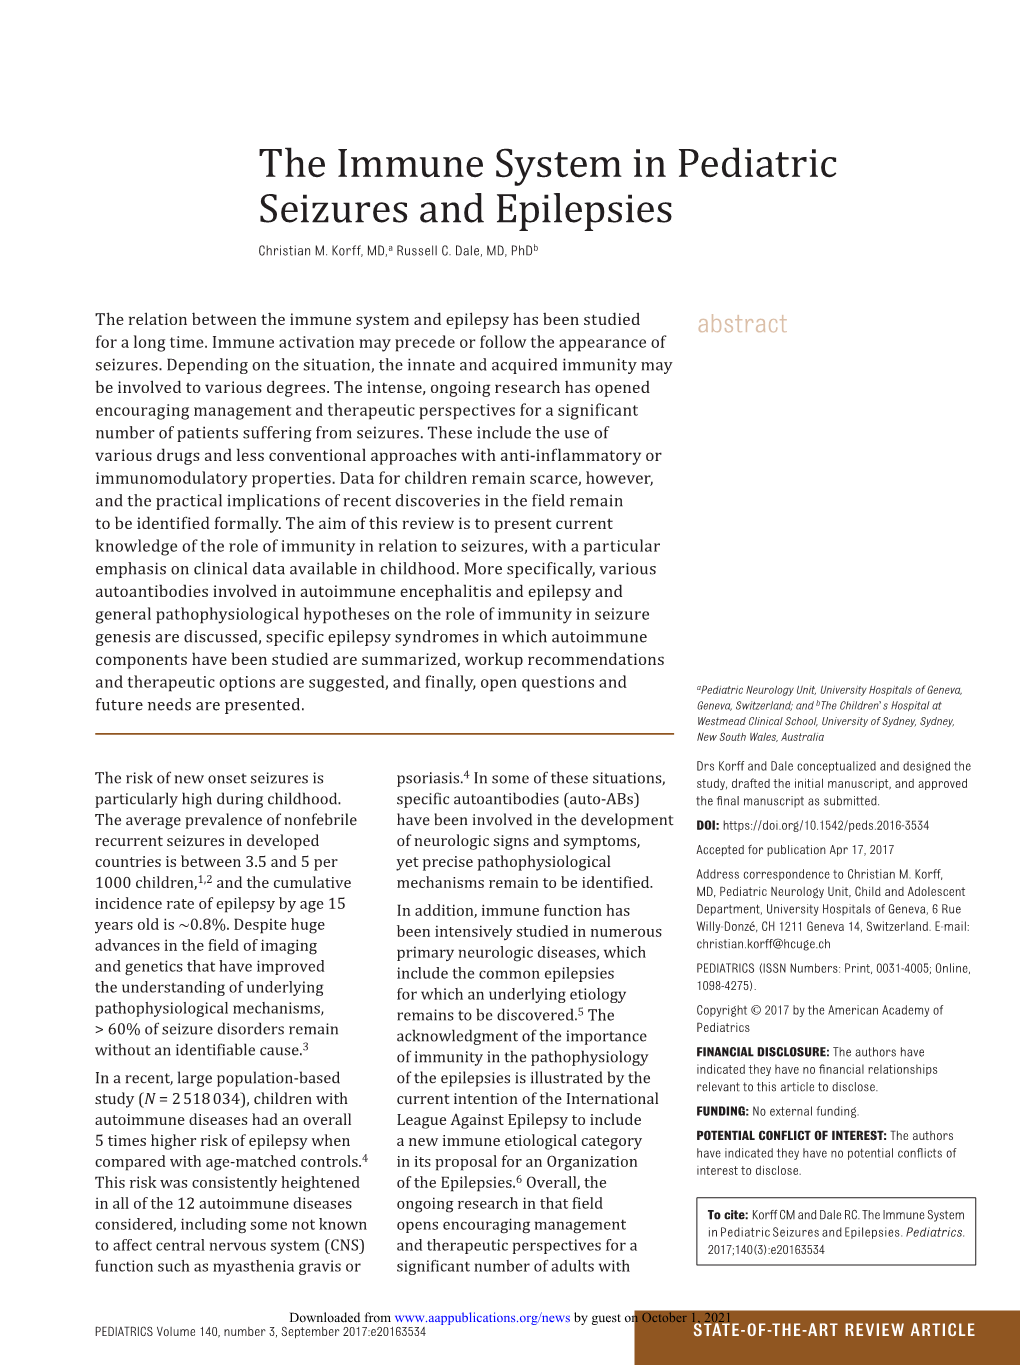 The Immune System in Pediatric Seizures and Epilepsies